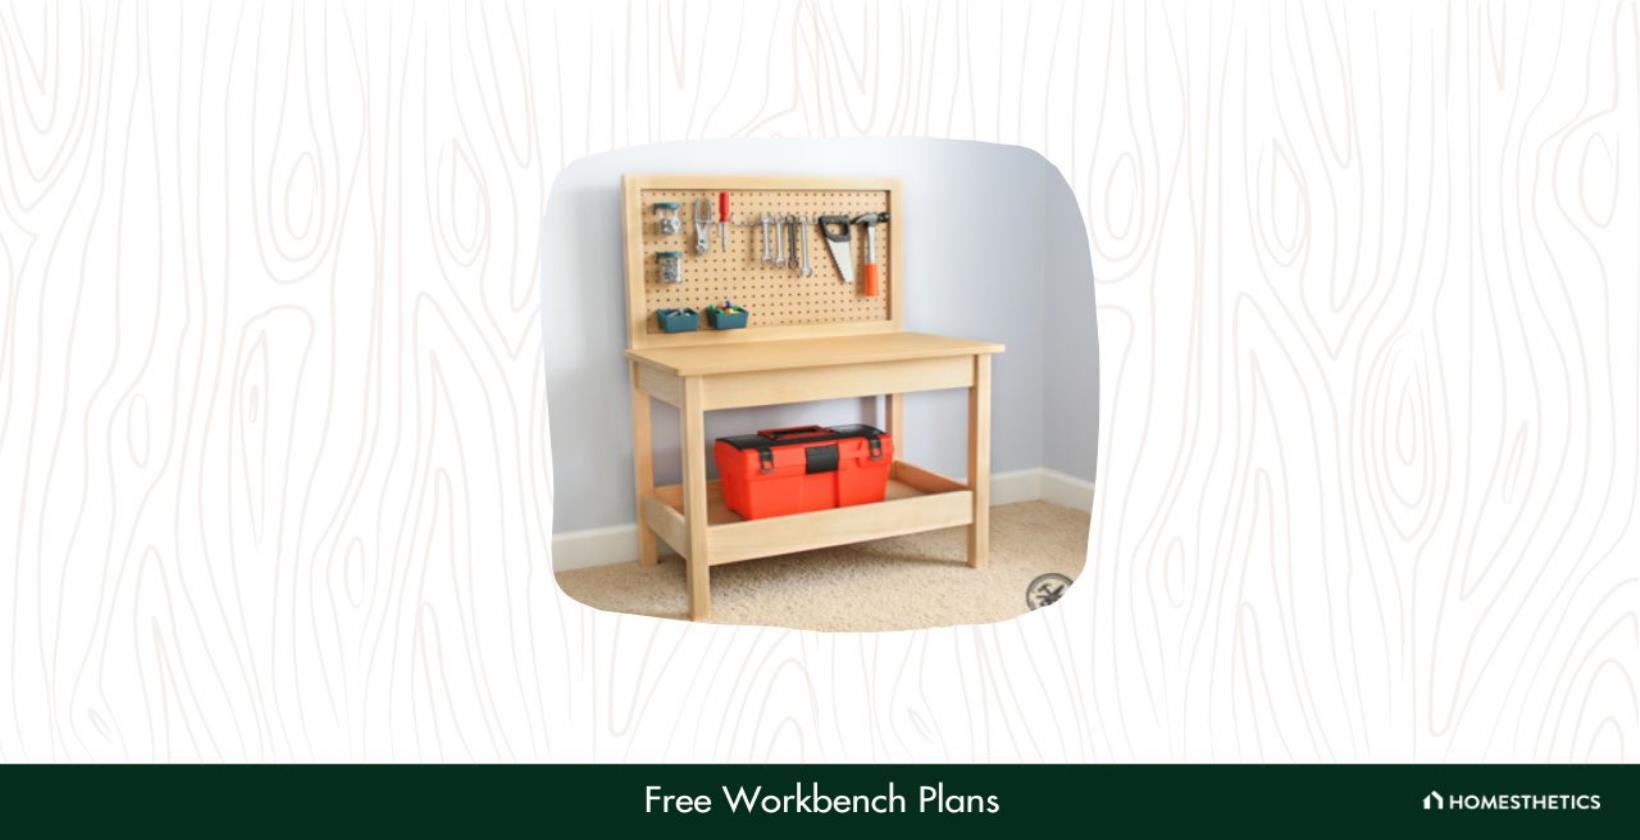 Free Workbench Plans